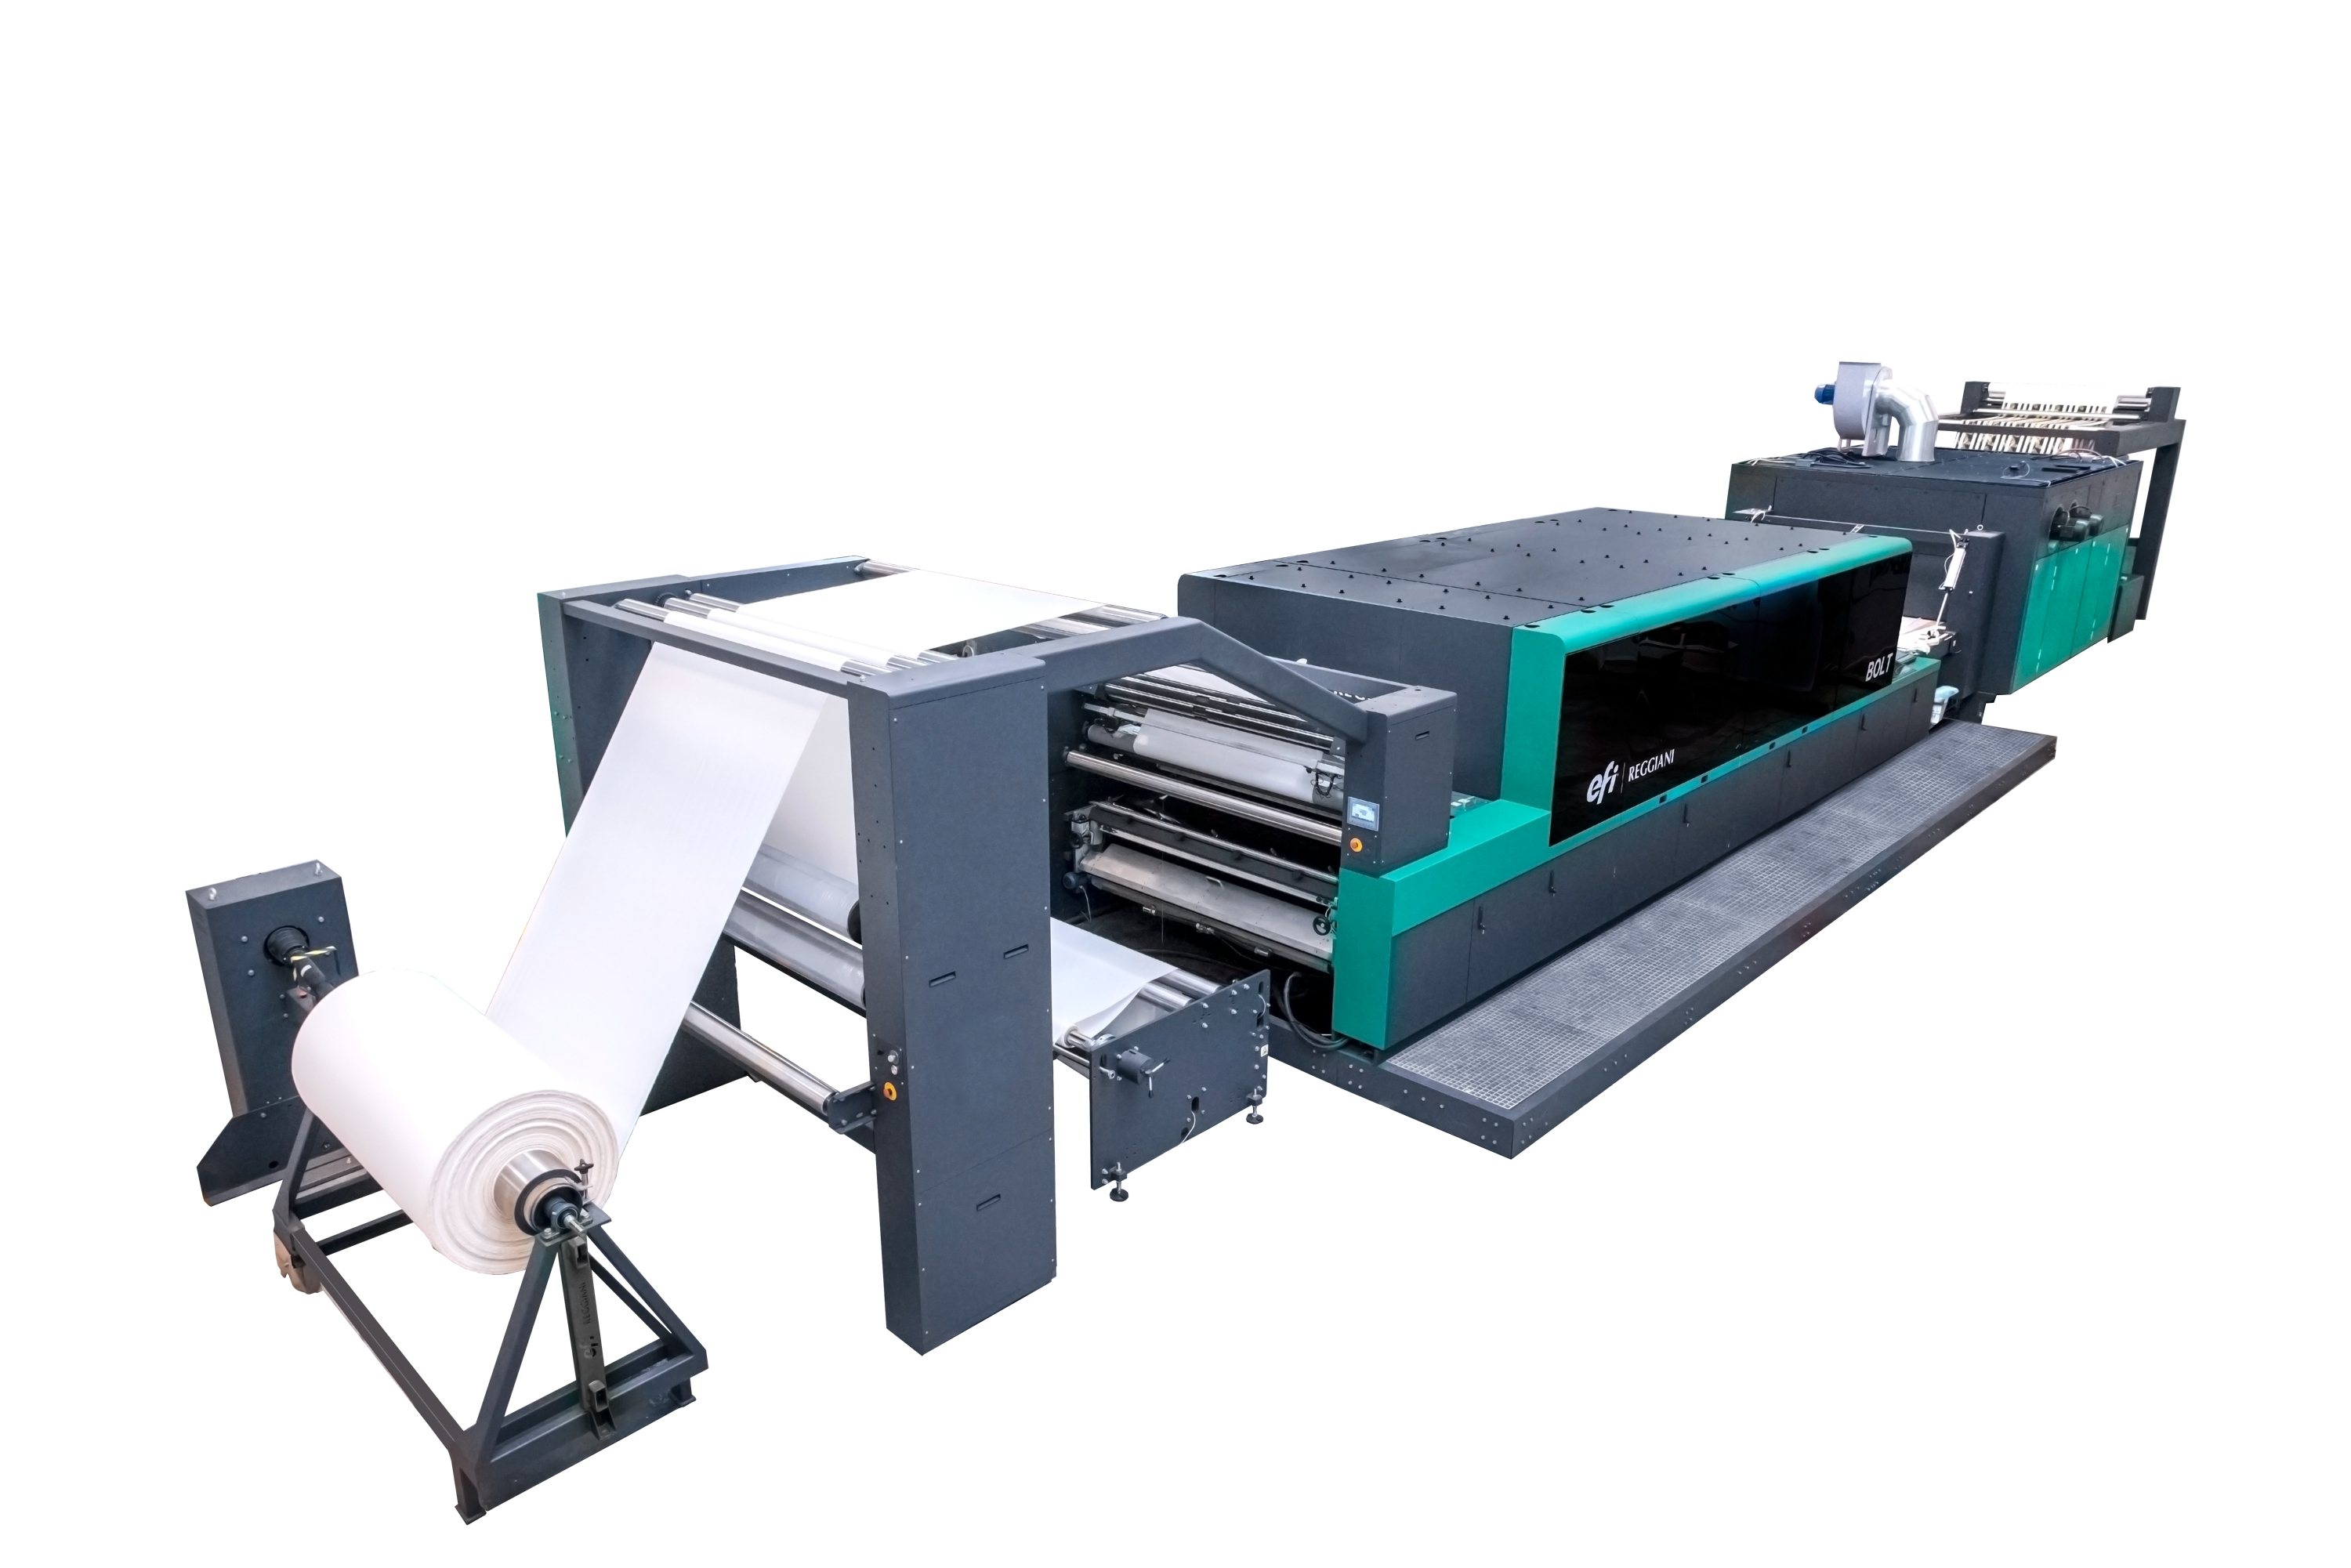 EFI Reggiani set to launch three new printers